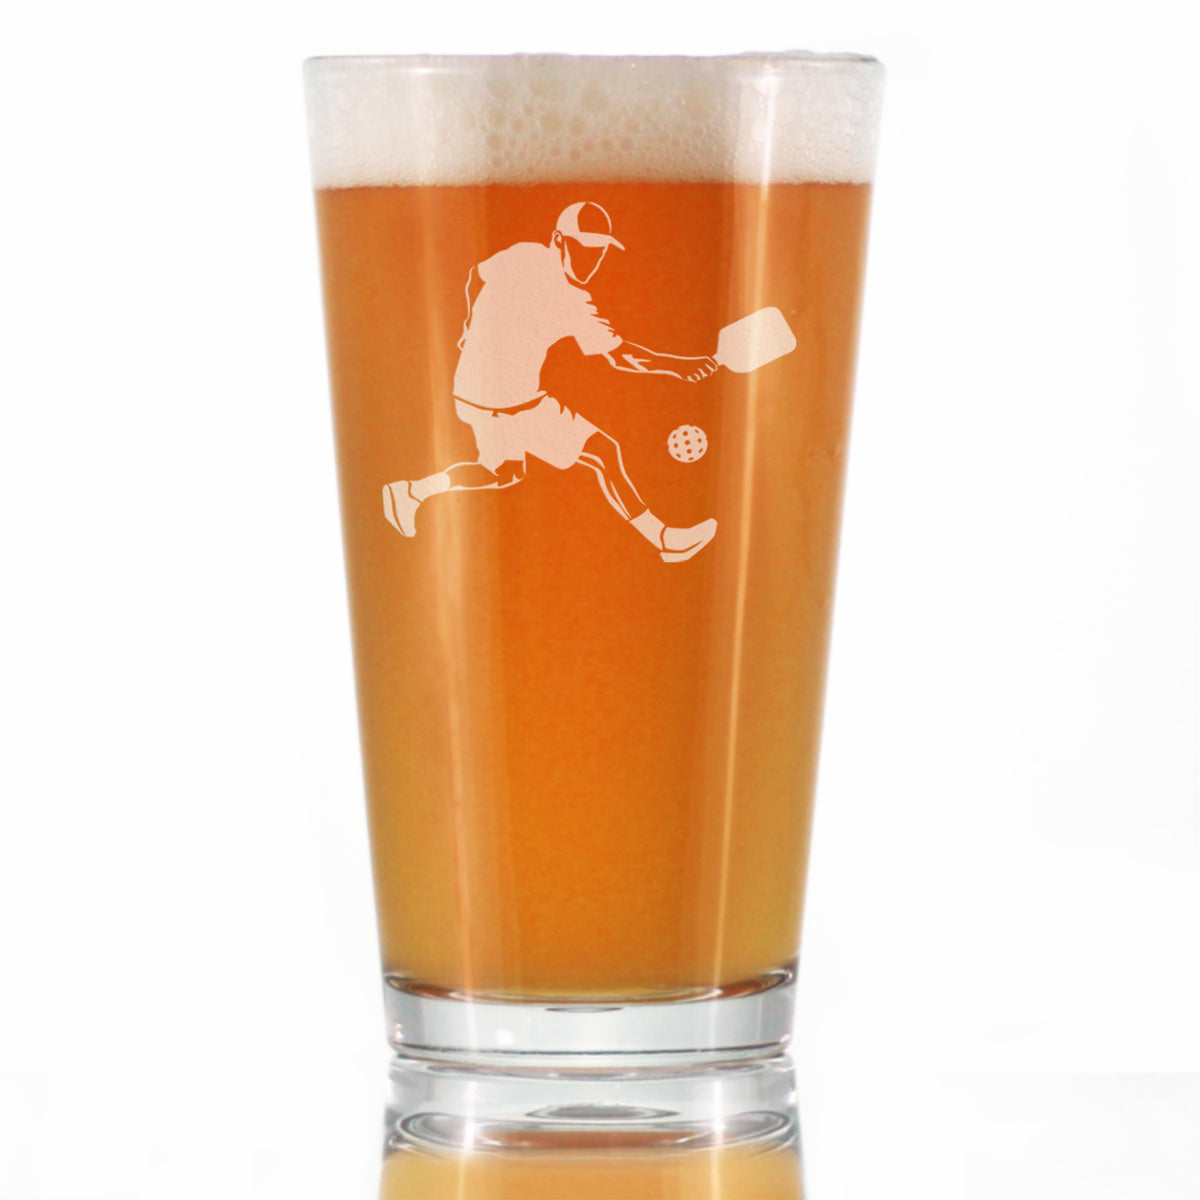 Pickleball Player Man Pint Glass for Beer - Pickleball Gifts and Decor for Men - 16 Oz Glasses